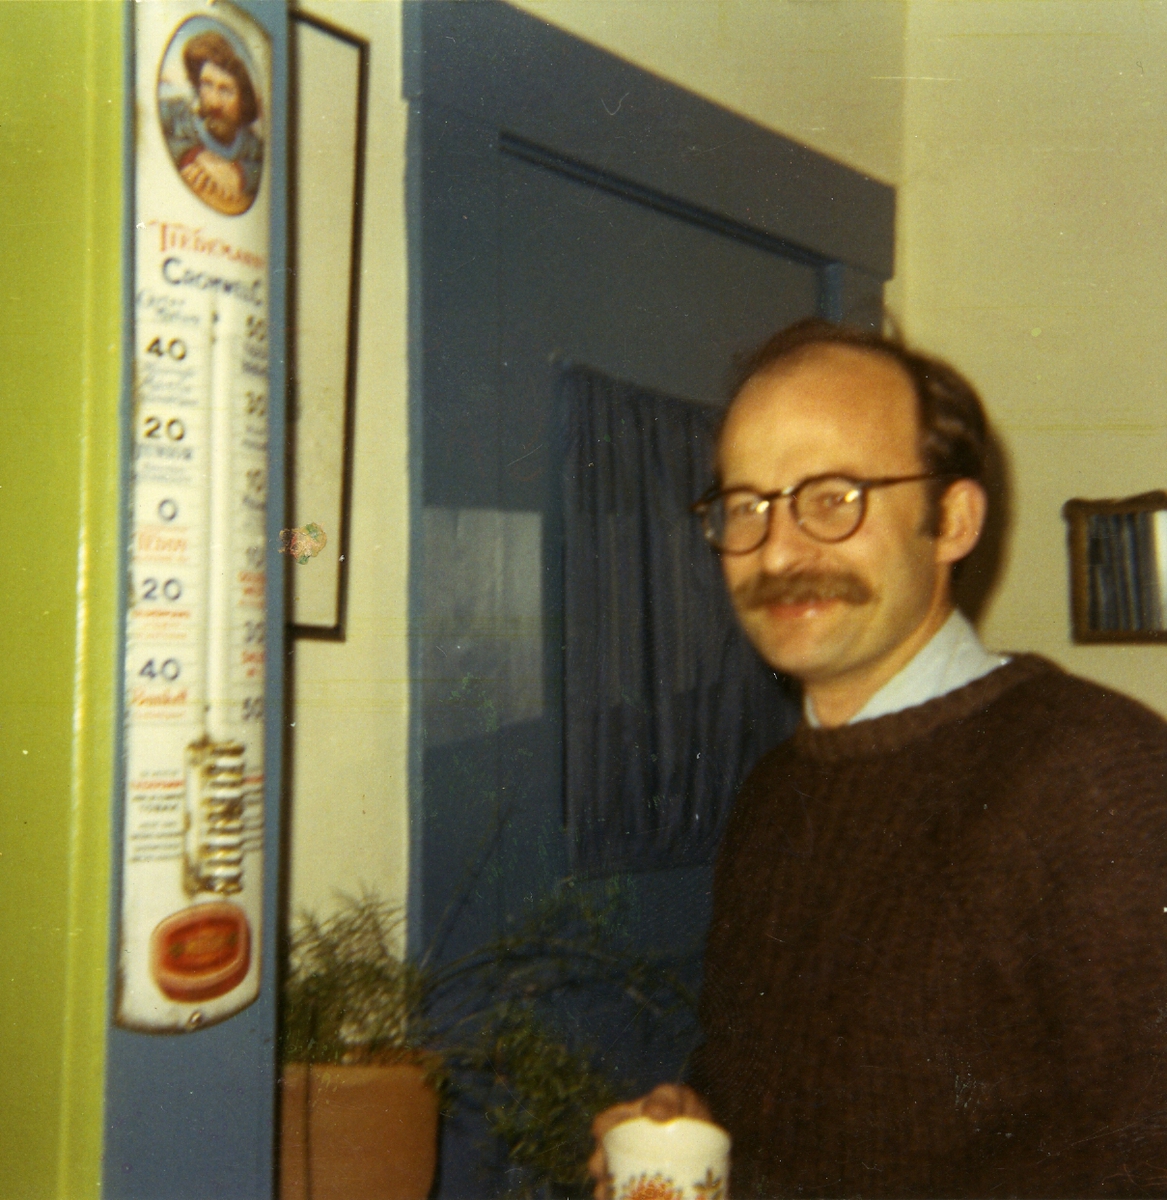 En mann står ved en termometer fra Tiedemann.